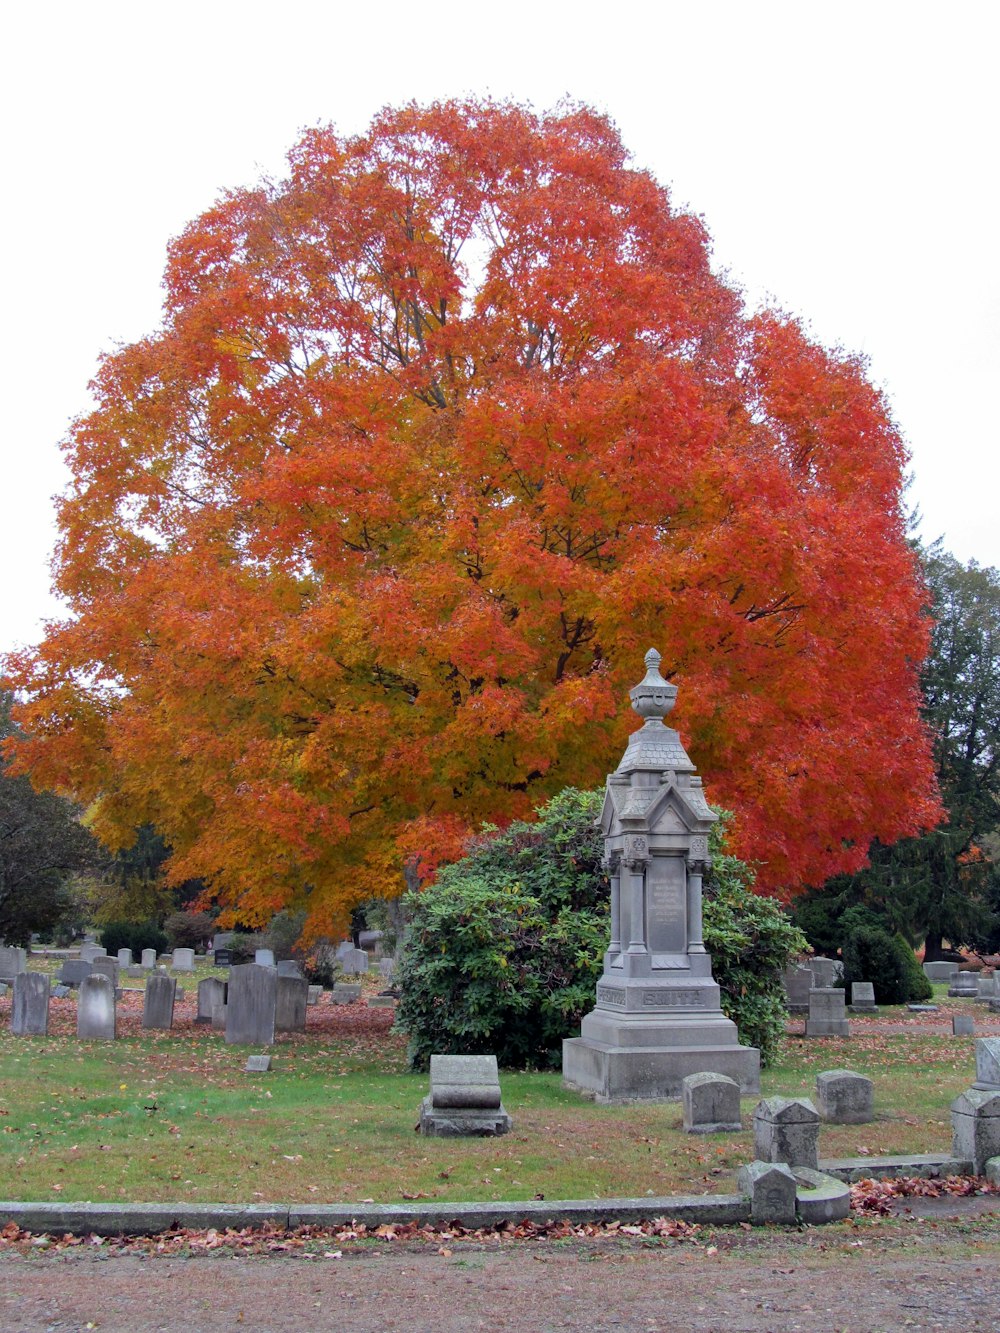 Episode 57 - Elm Grove Cemetery in Mystic, Connecticut